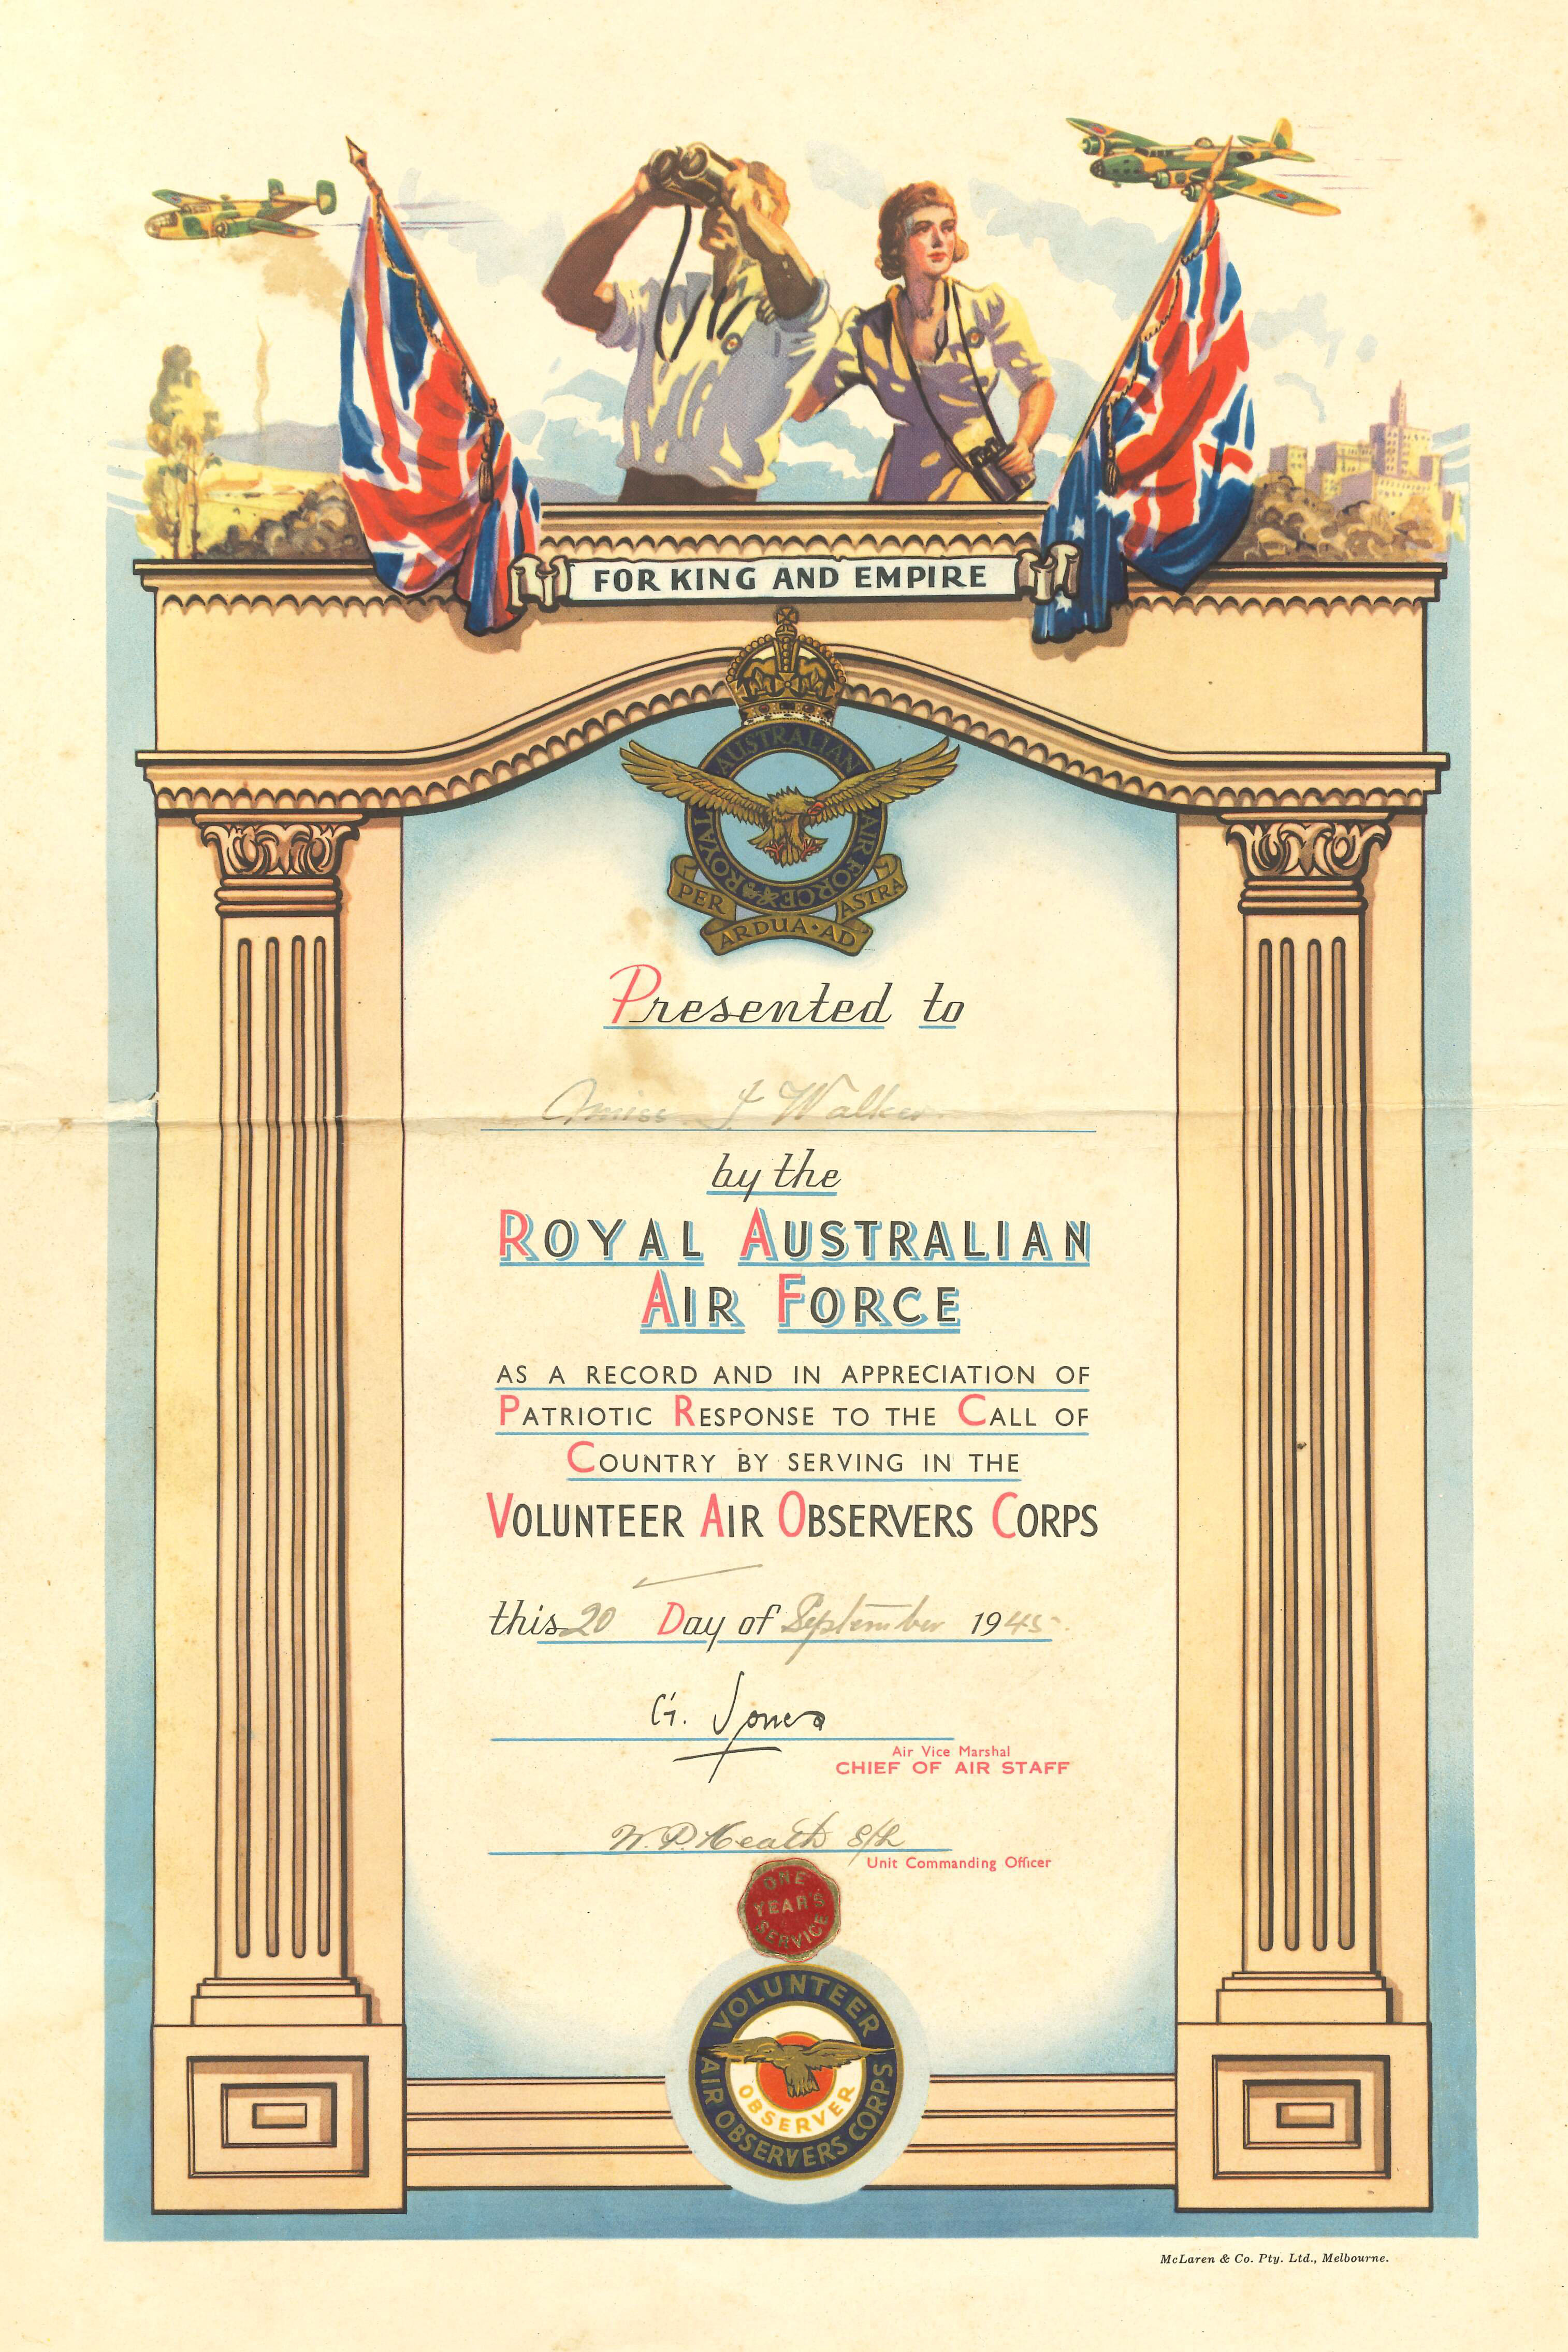 Irene Walker's 1945 Royal Australian Air Force certificate for air observation